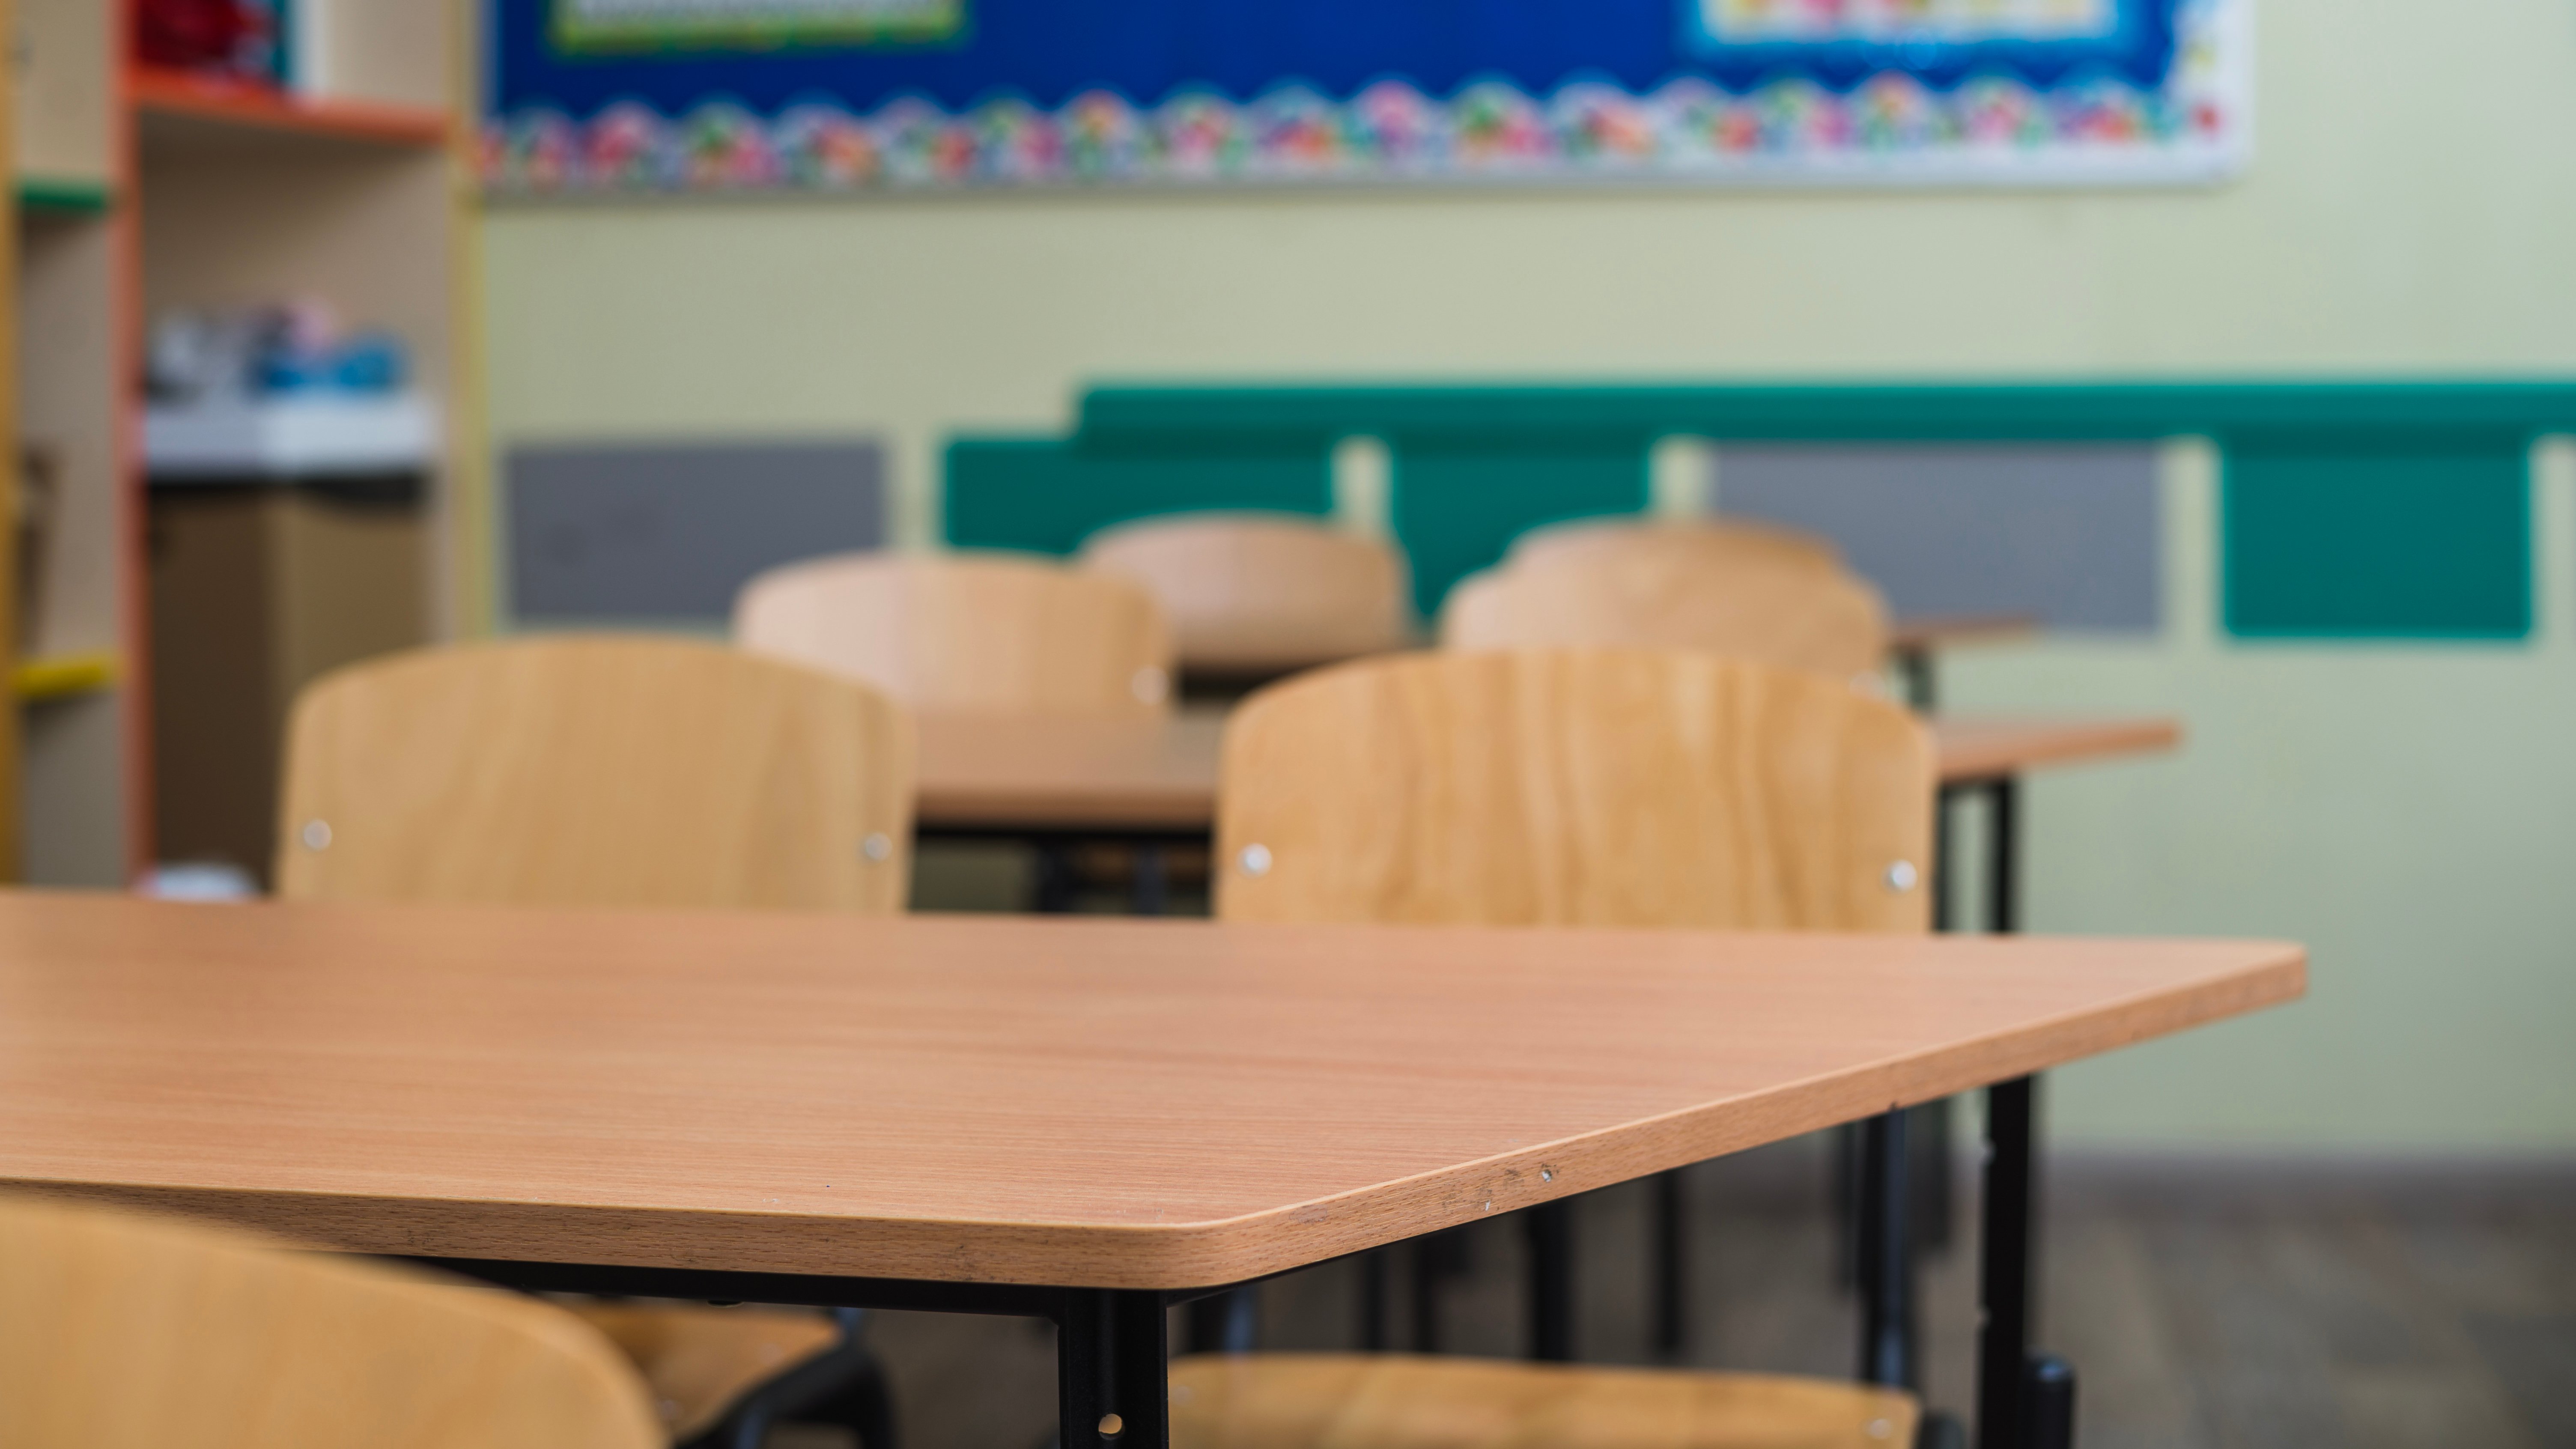 Após aumento concedido aos professores da rede estadual, nova proposta estende reajuste a agentes de suporte educacional (ASE)